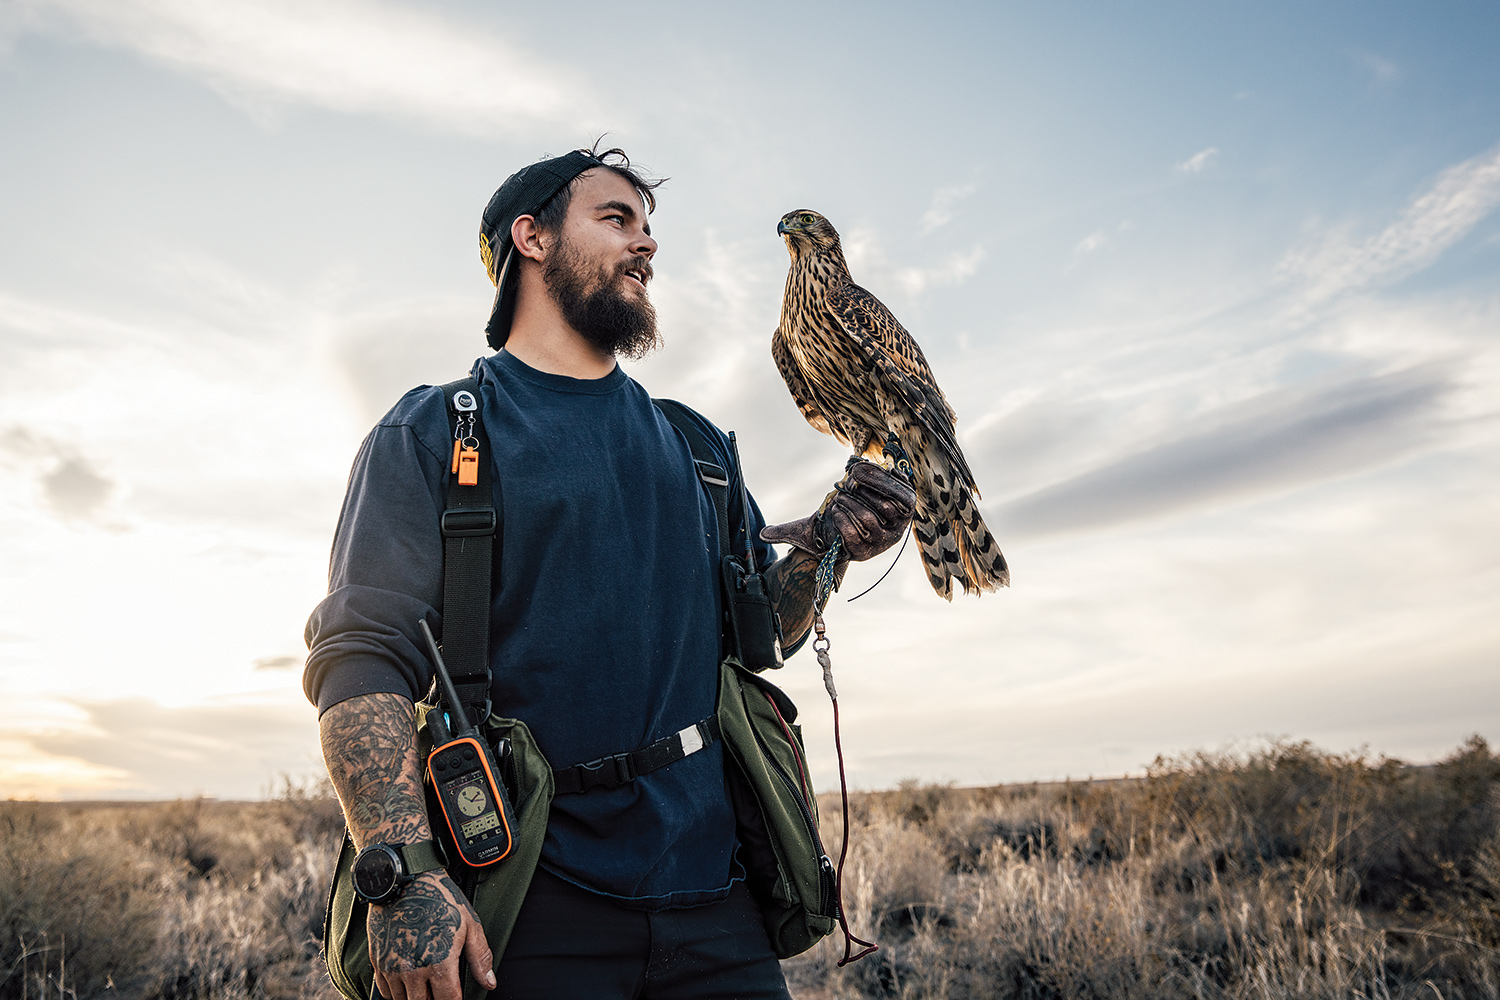 falconer with goshawk on hand